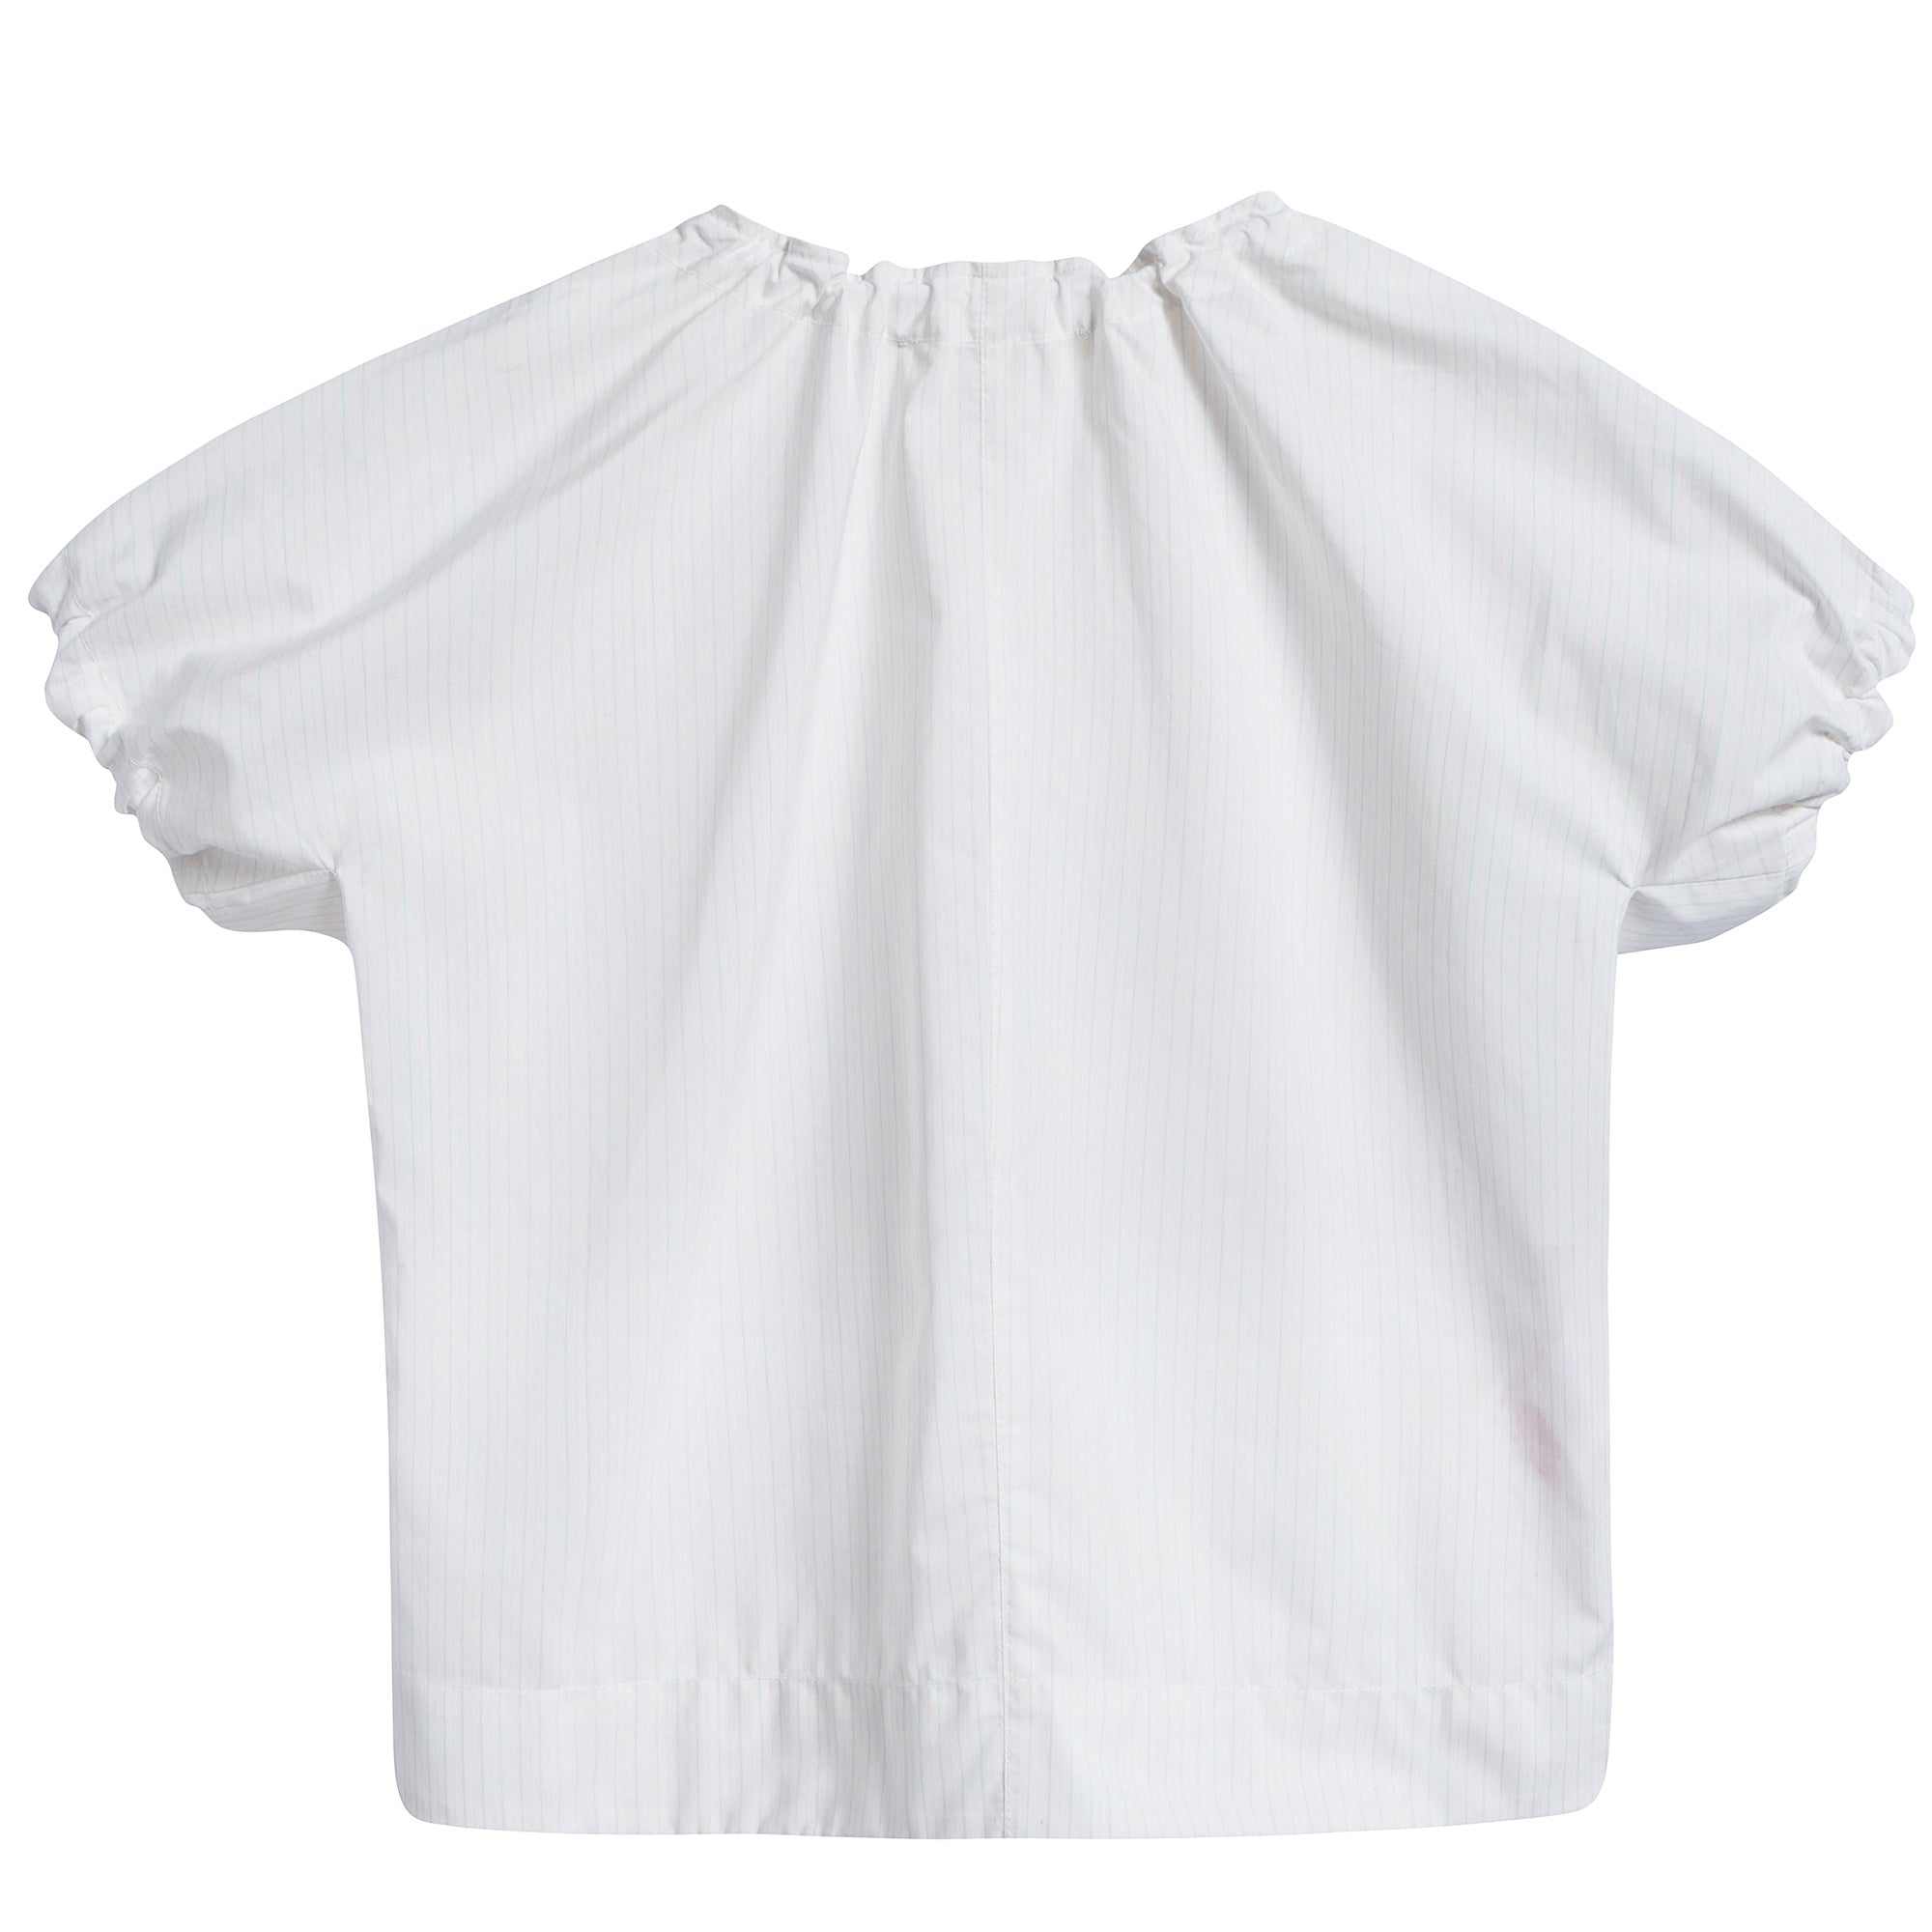 Girls White Striped Cotton T-shirt